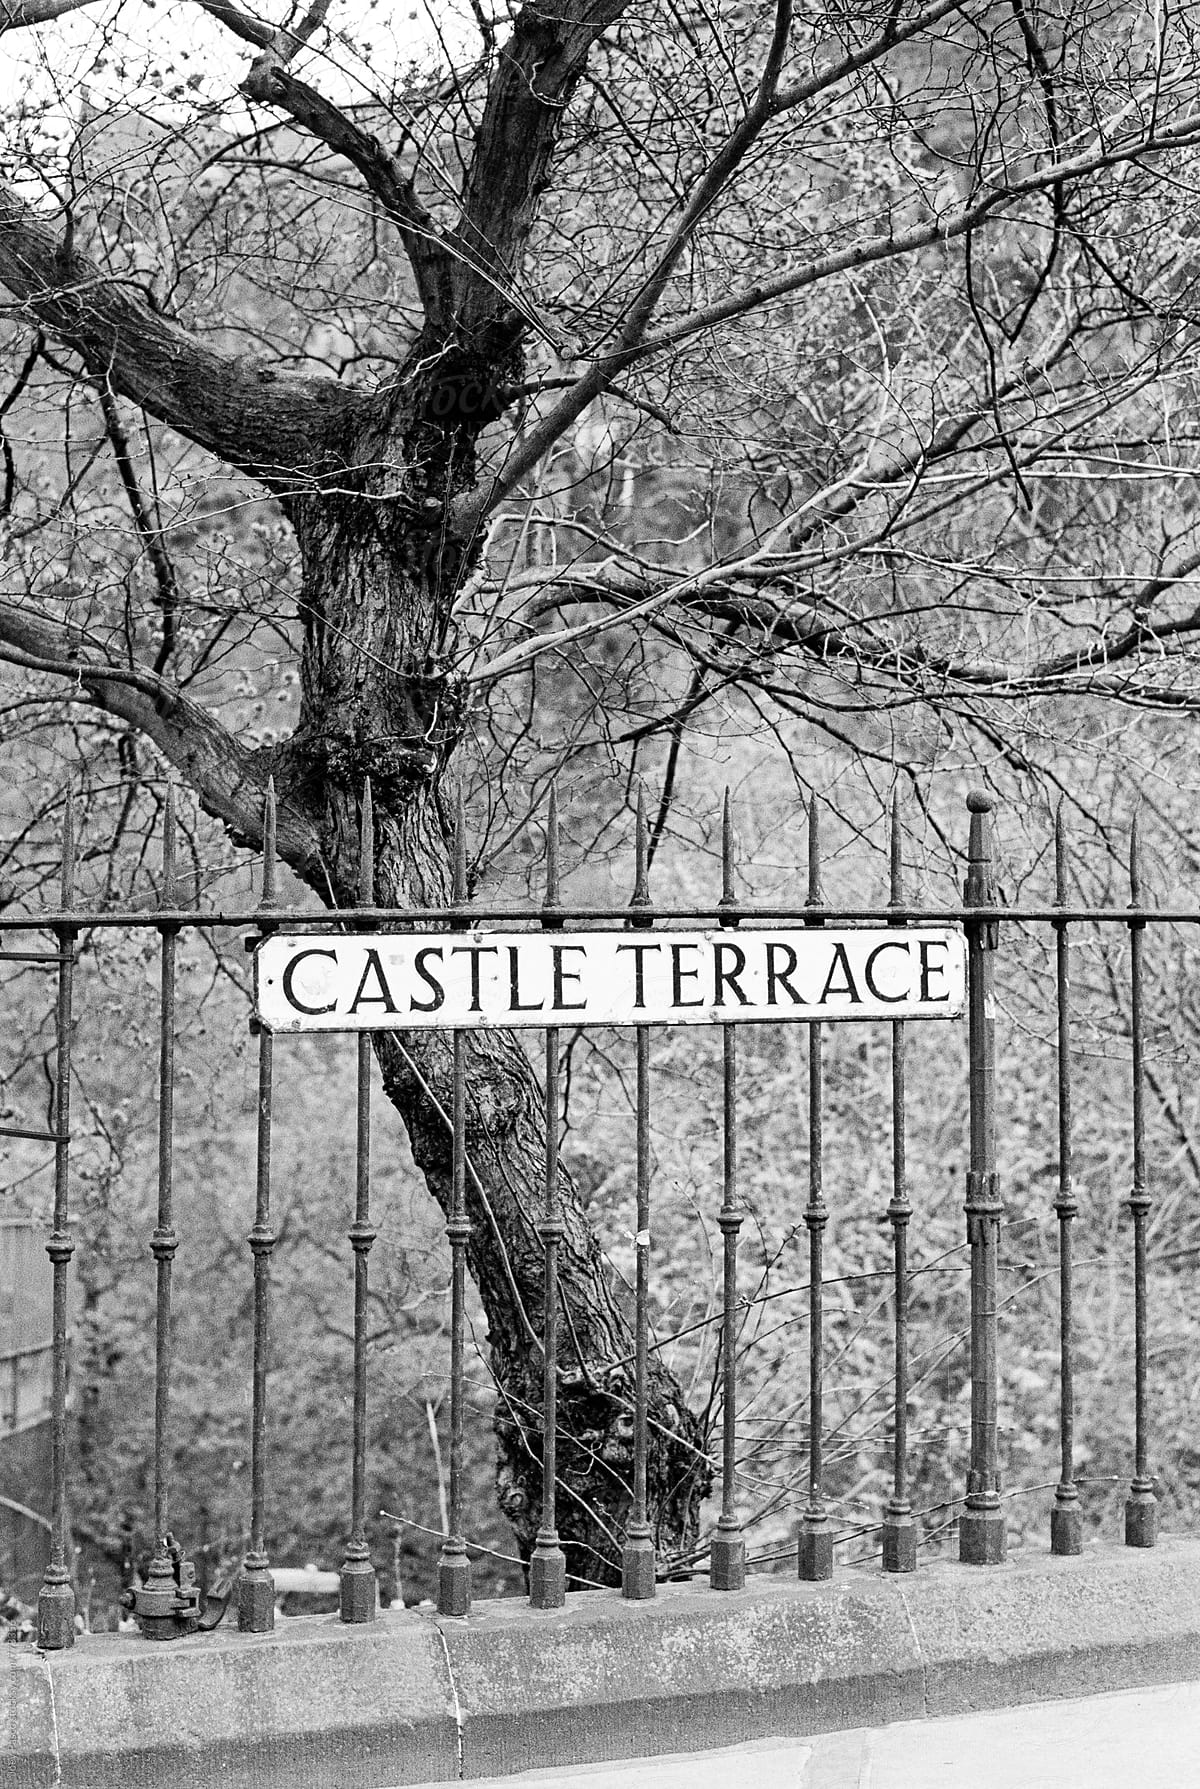 Castle Terrace sign at Edinburgh Castle